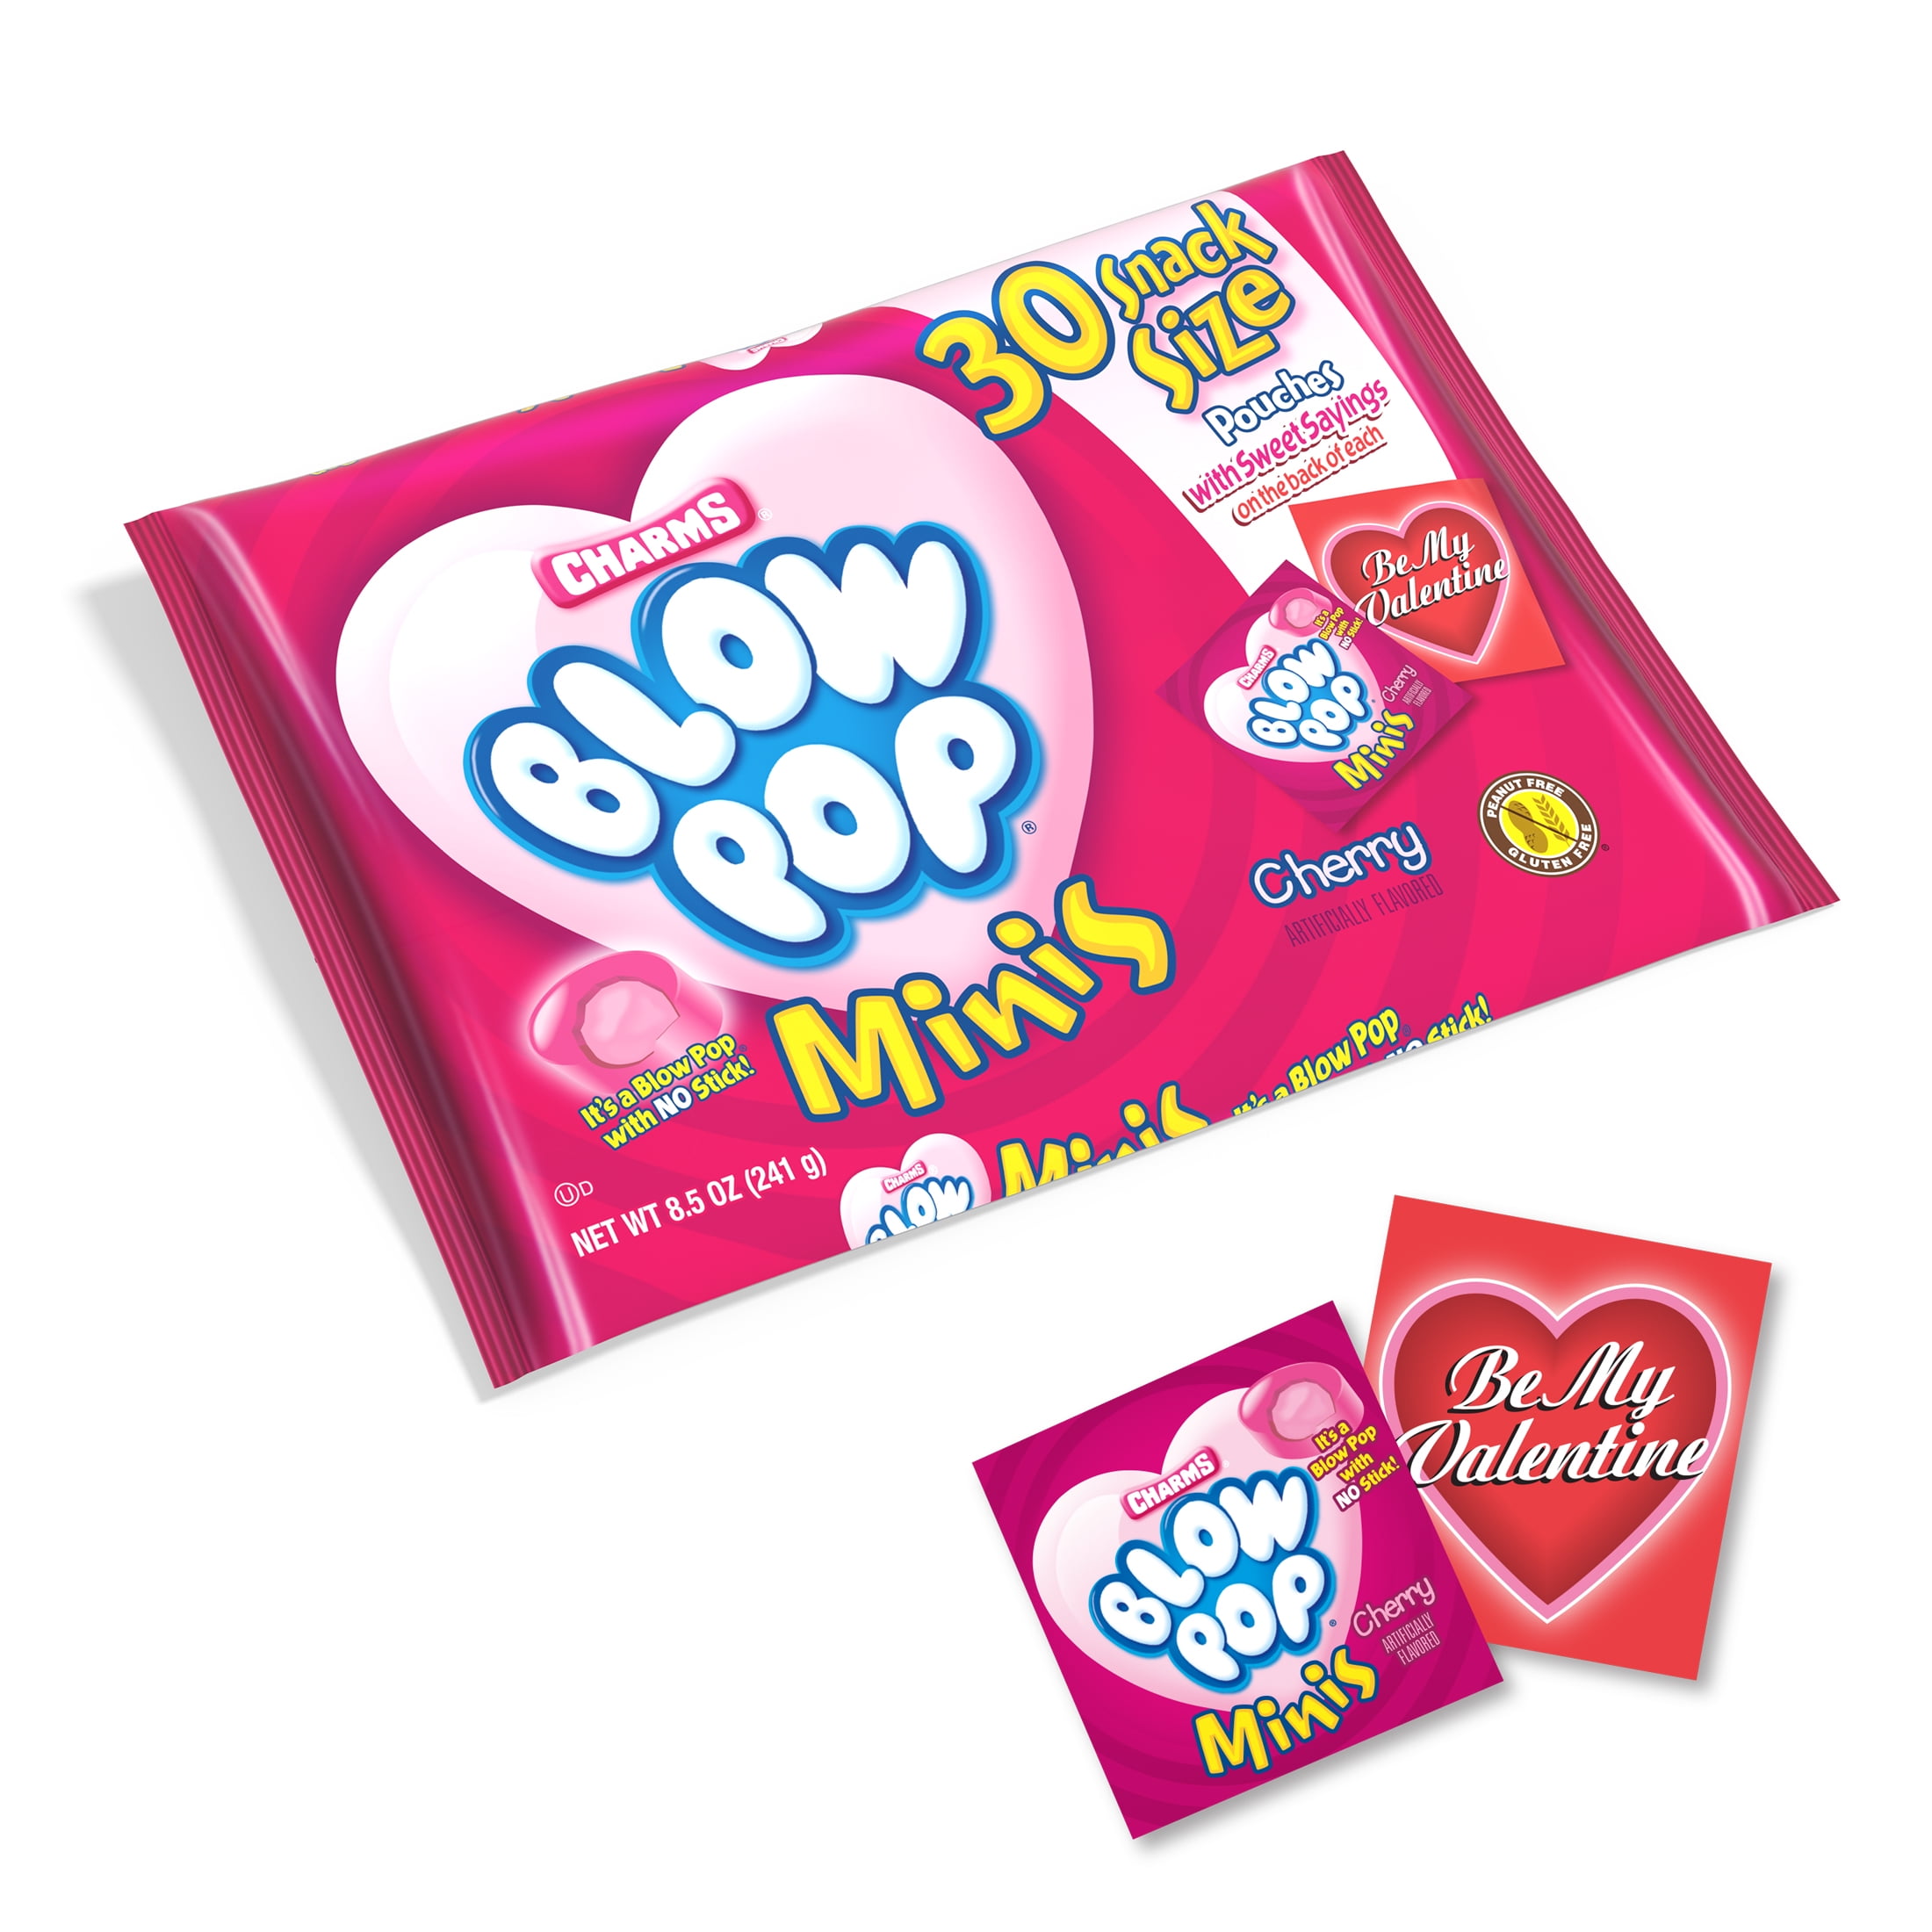 Charms Valentine Blow Pop Exchange